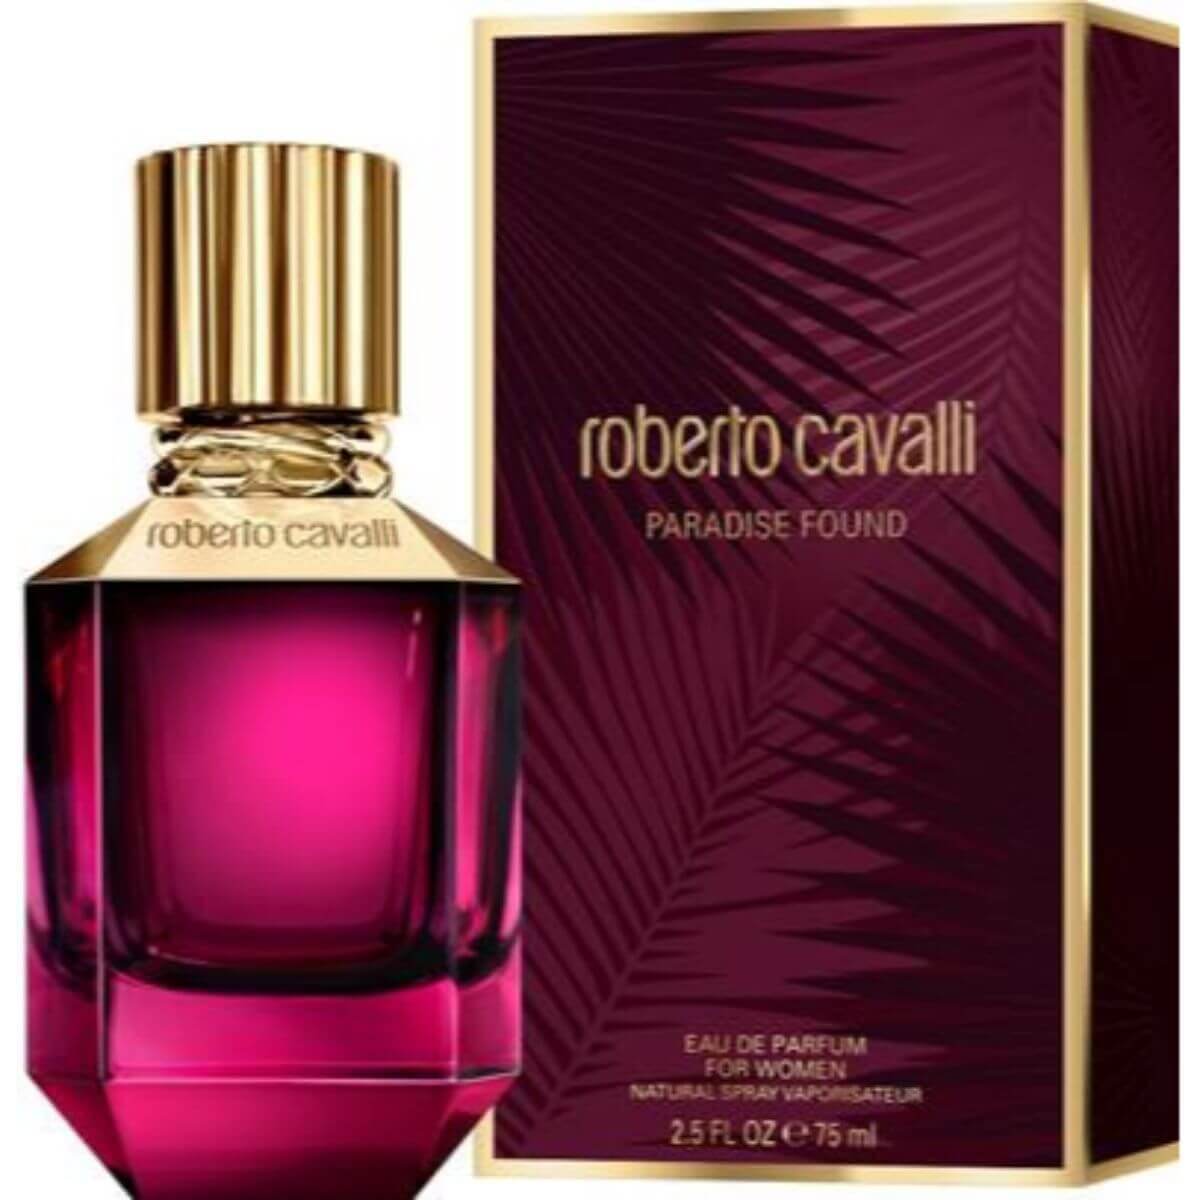 Roberto Cavalli Paradise Found Female - 75ML